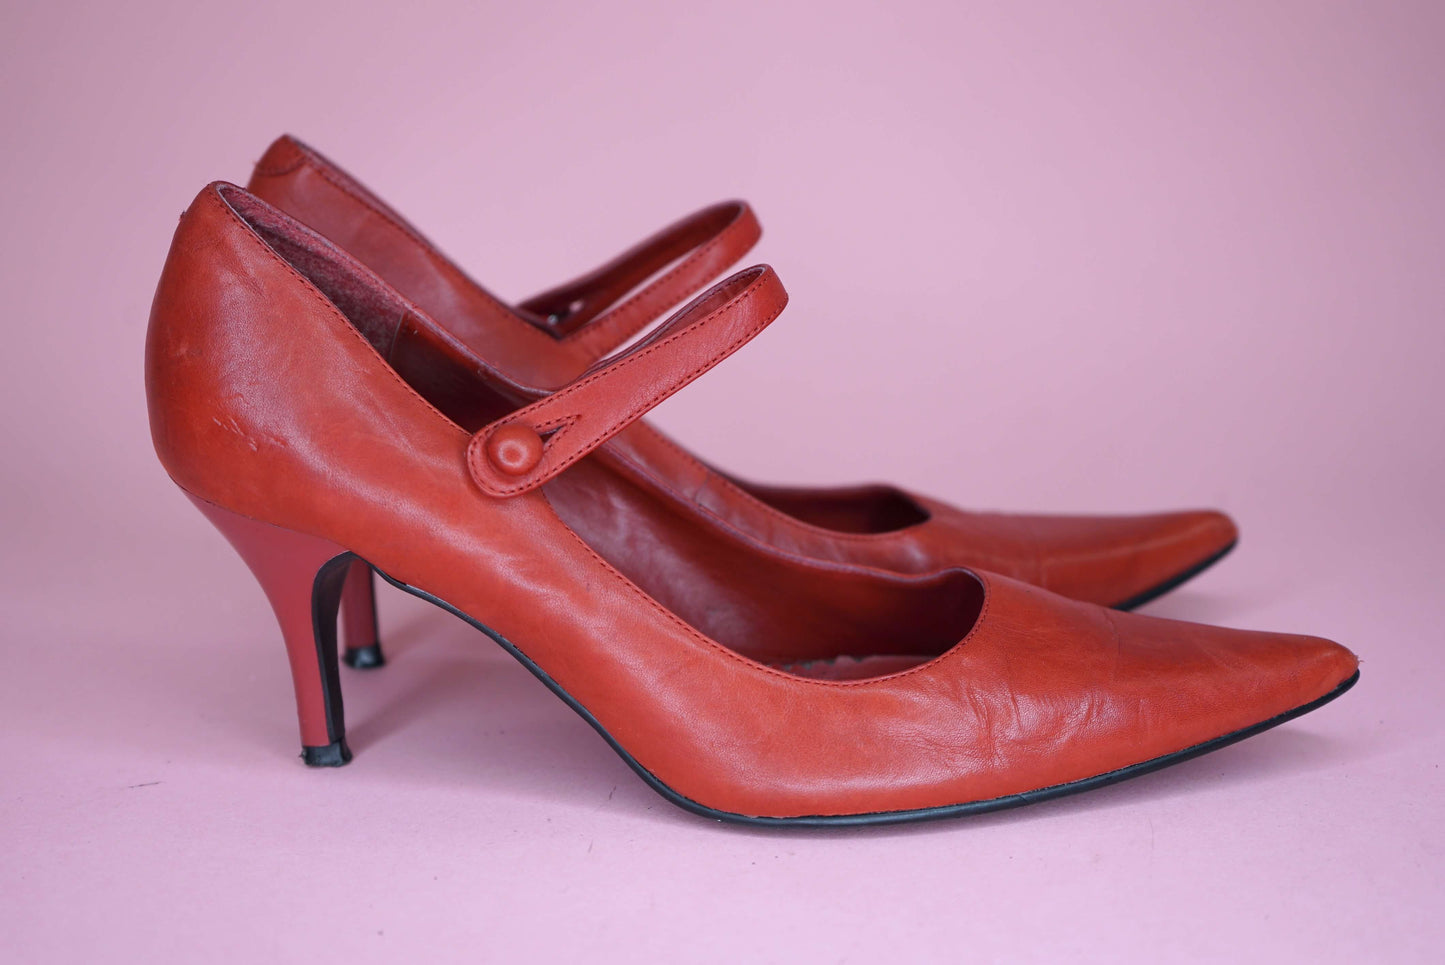 Red Vintage Heels Stilletos Mary Jane Shoes Pointed Toe Heels Womens Shoes Burgundy Front Strap Pumps UK Size 4-4.5/ EUR 37-37.5